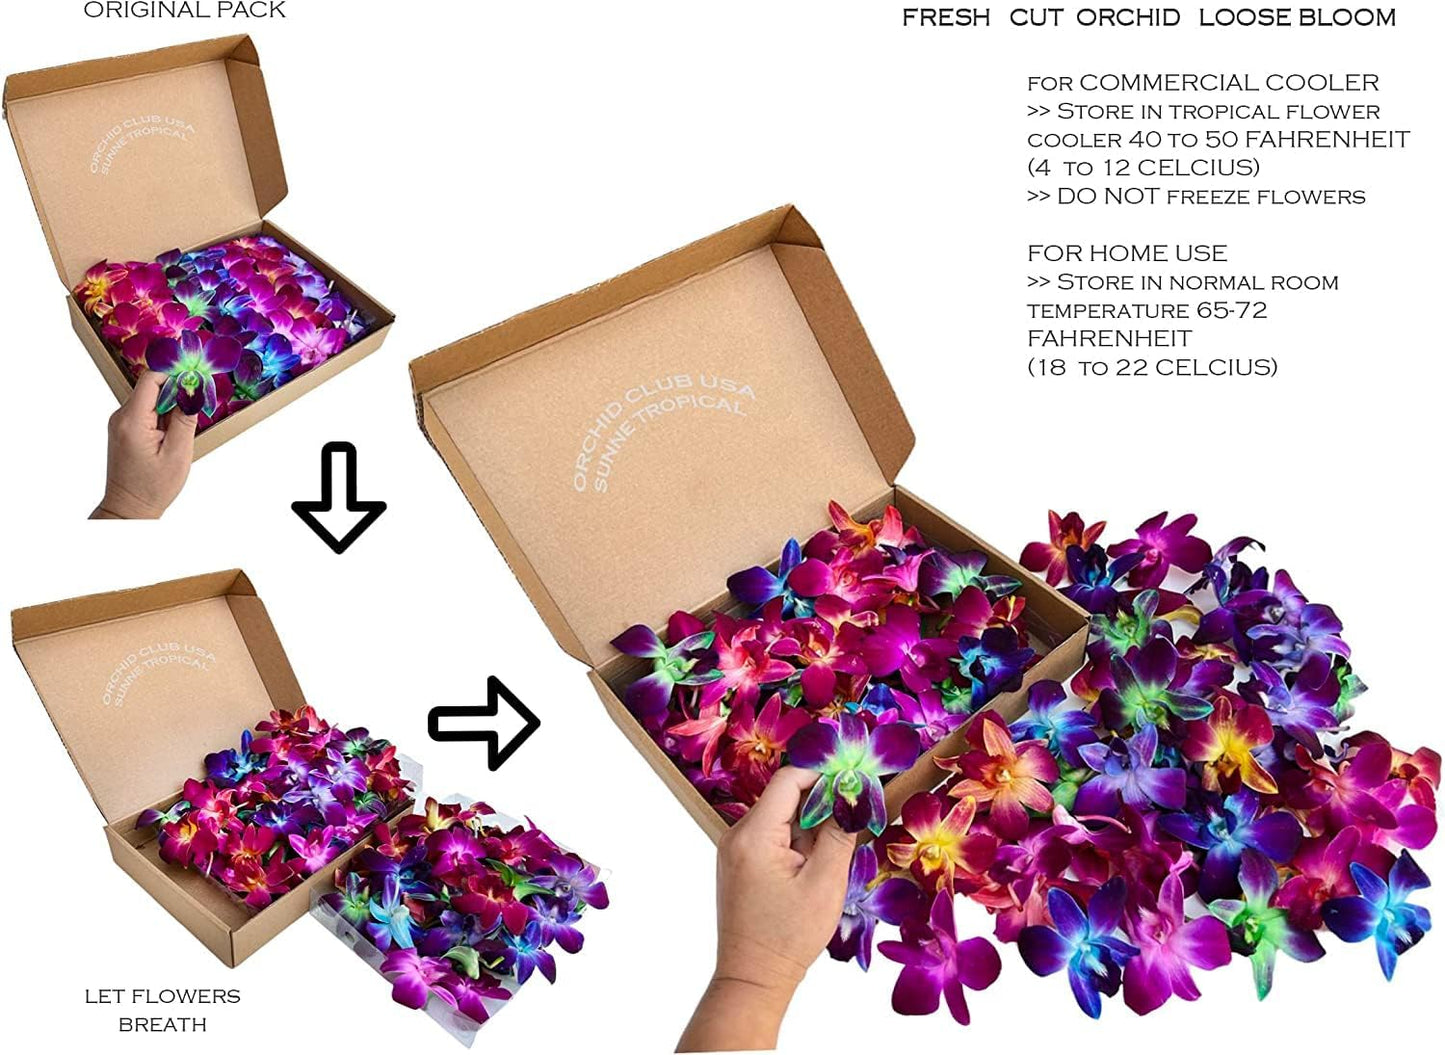 100 Rainbow Orchid Loose Bloom Subscription Fresh Cut Flowers